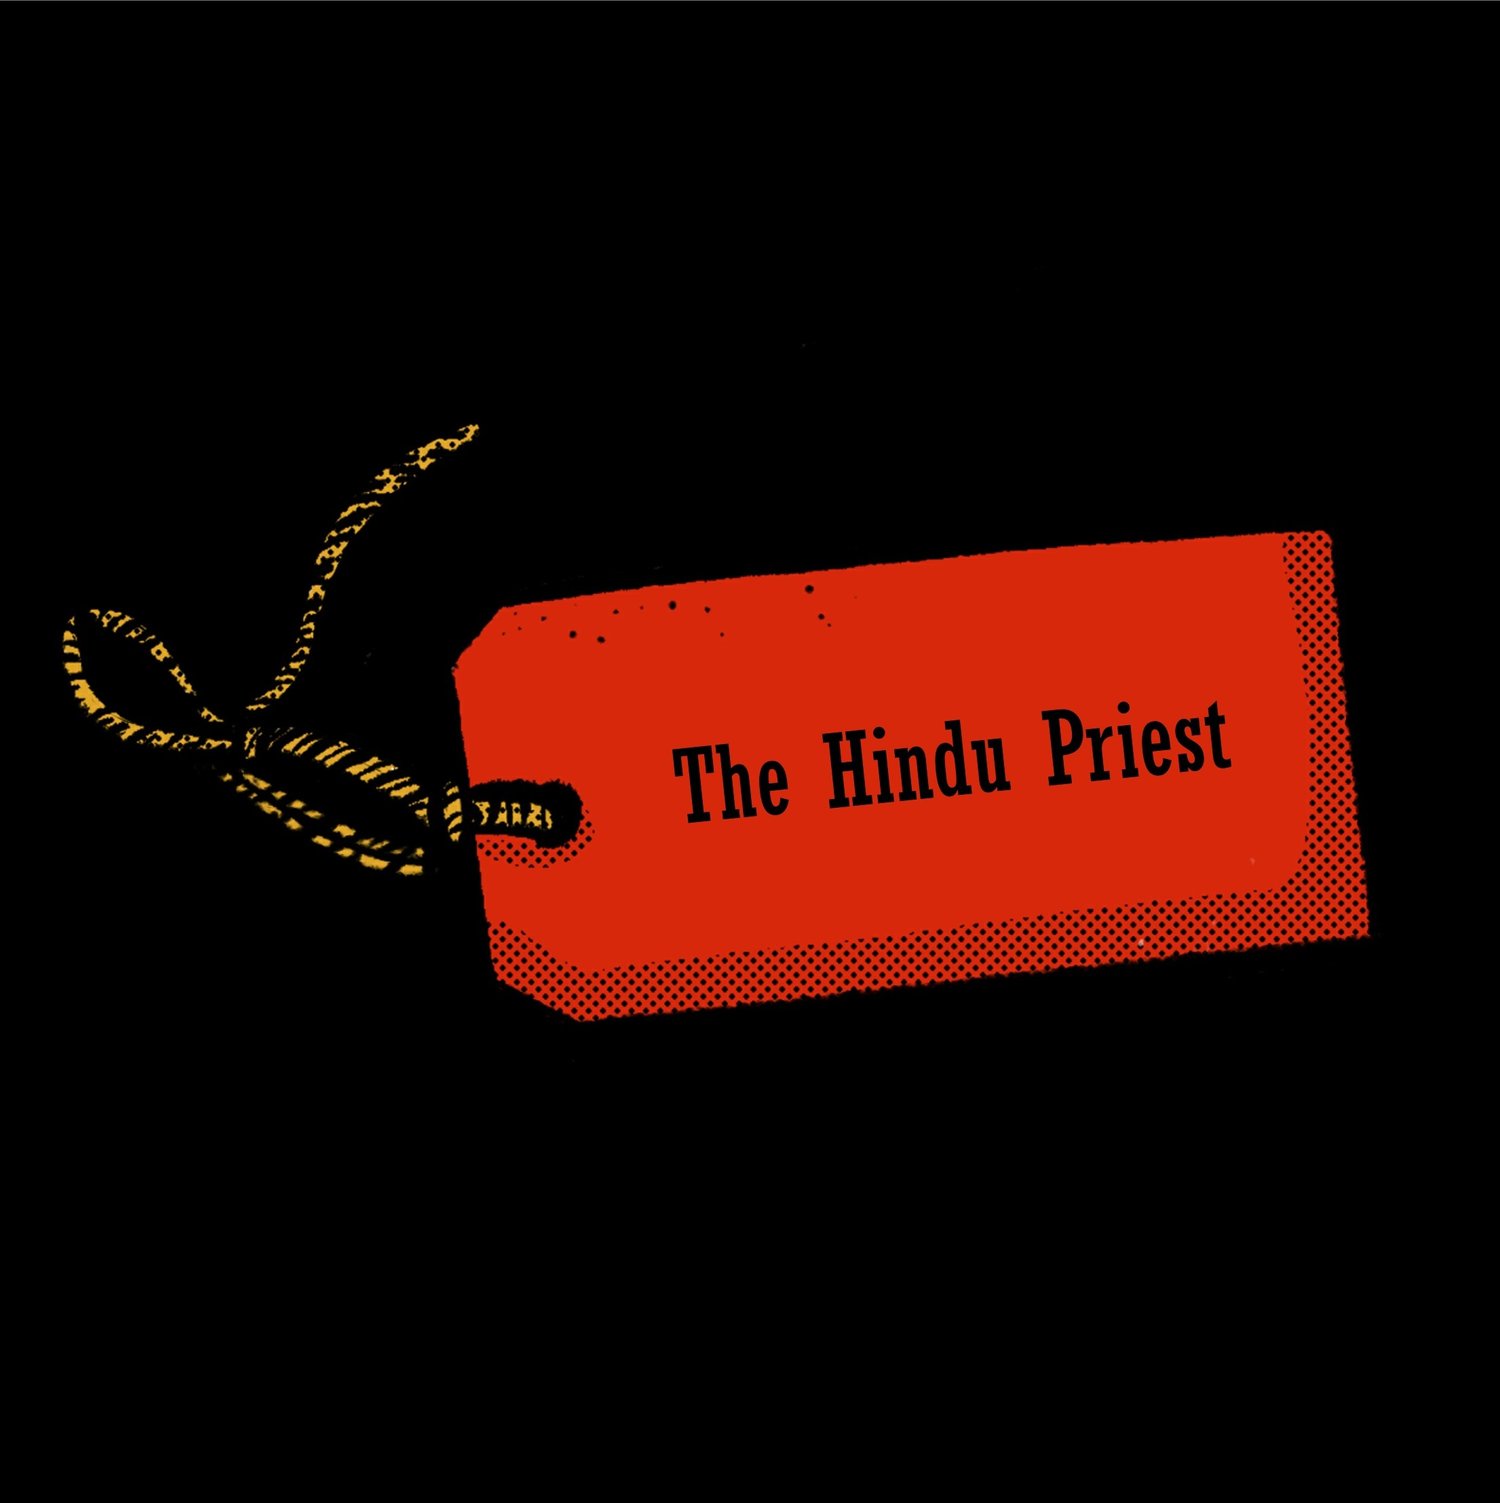 Episode 15: The Hindu Priest